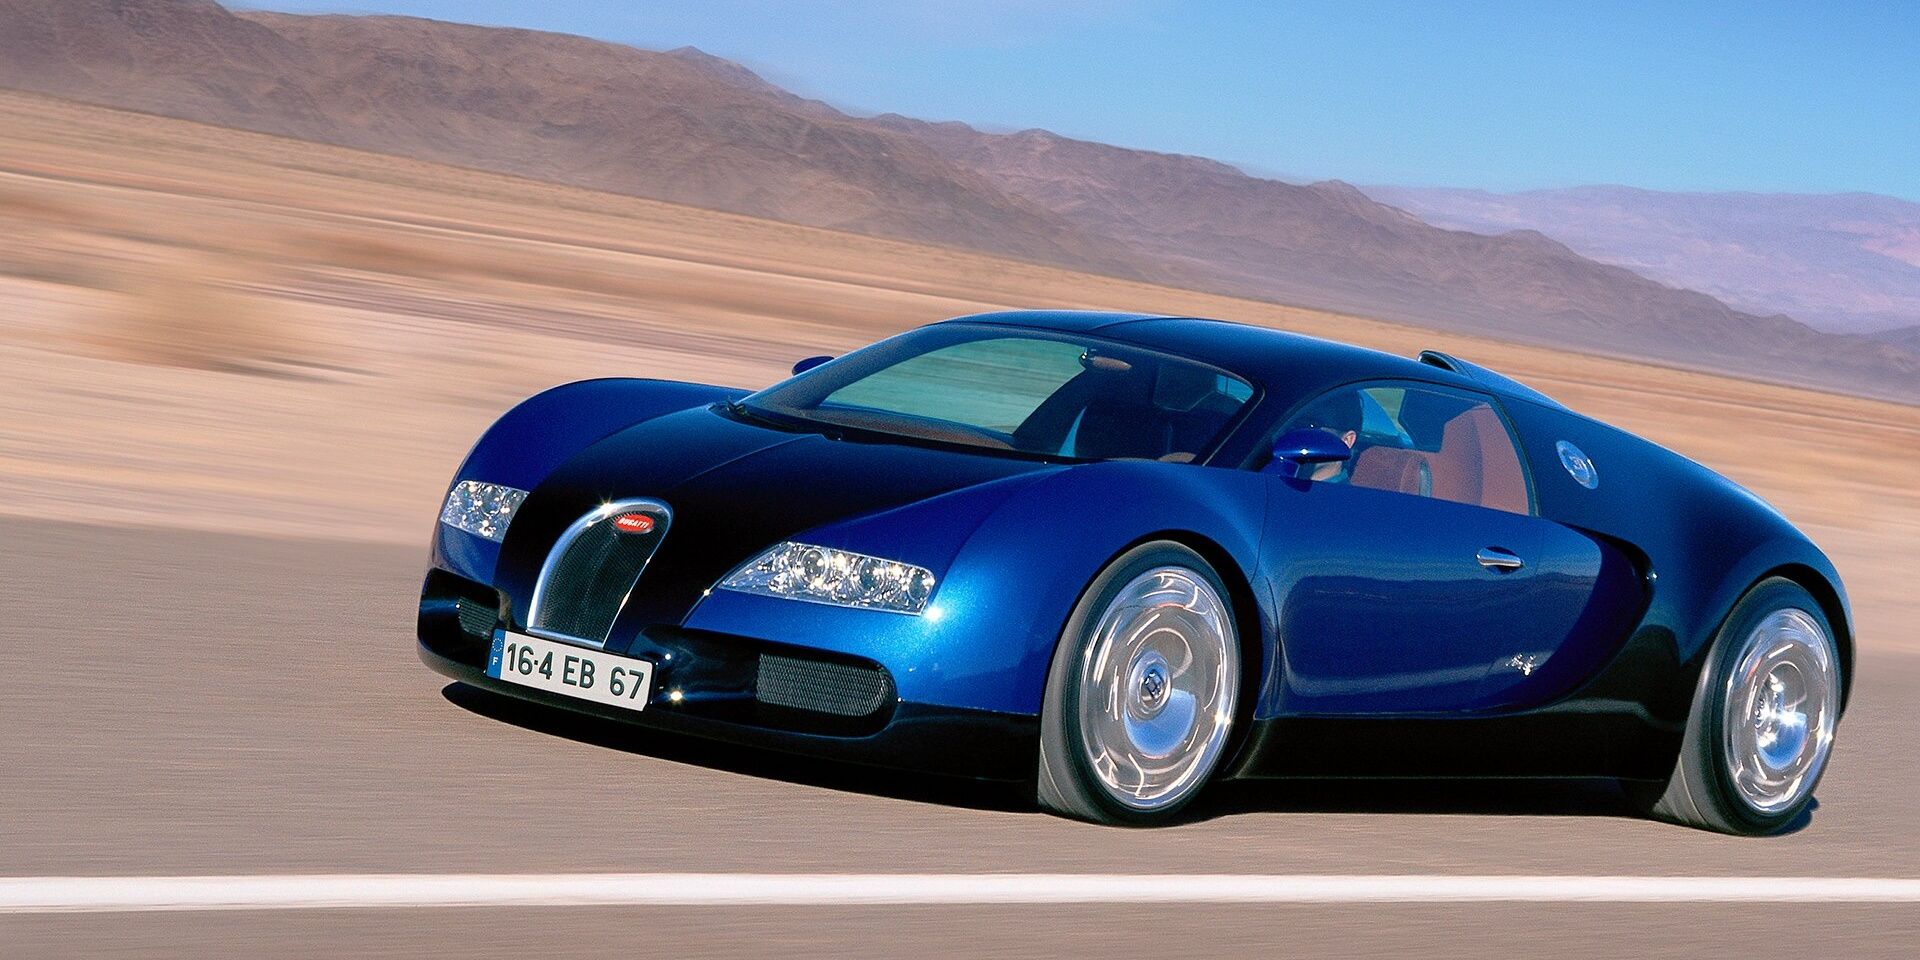 Blue Bugatti Veyron on the road